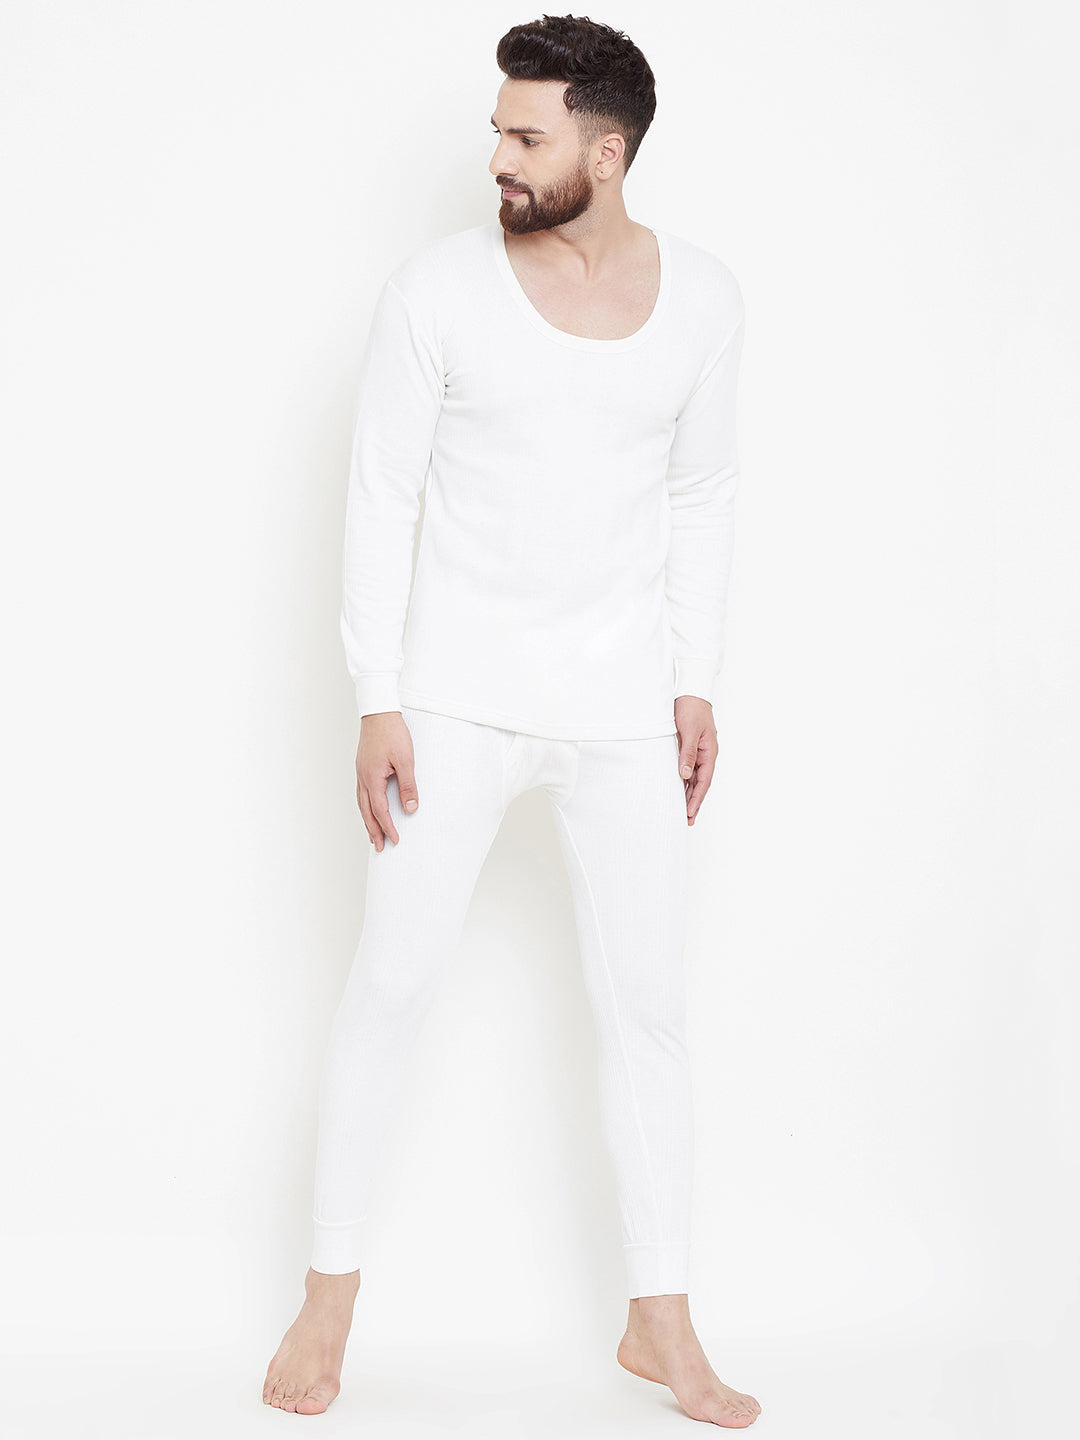 Zimfit Men's White Full Sleeves Thermal Set whitemoon.in